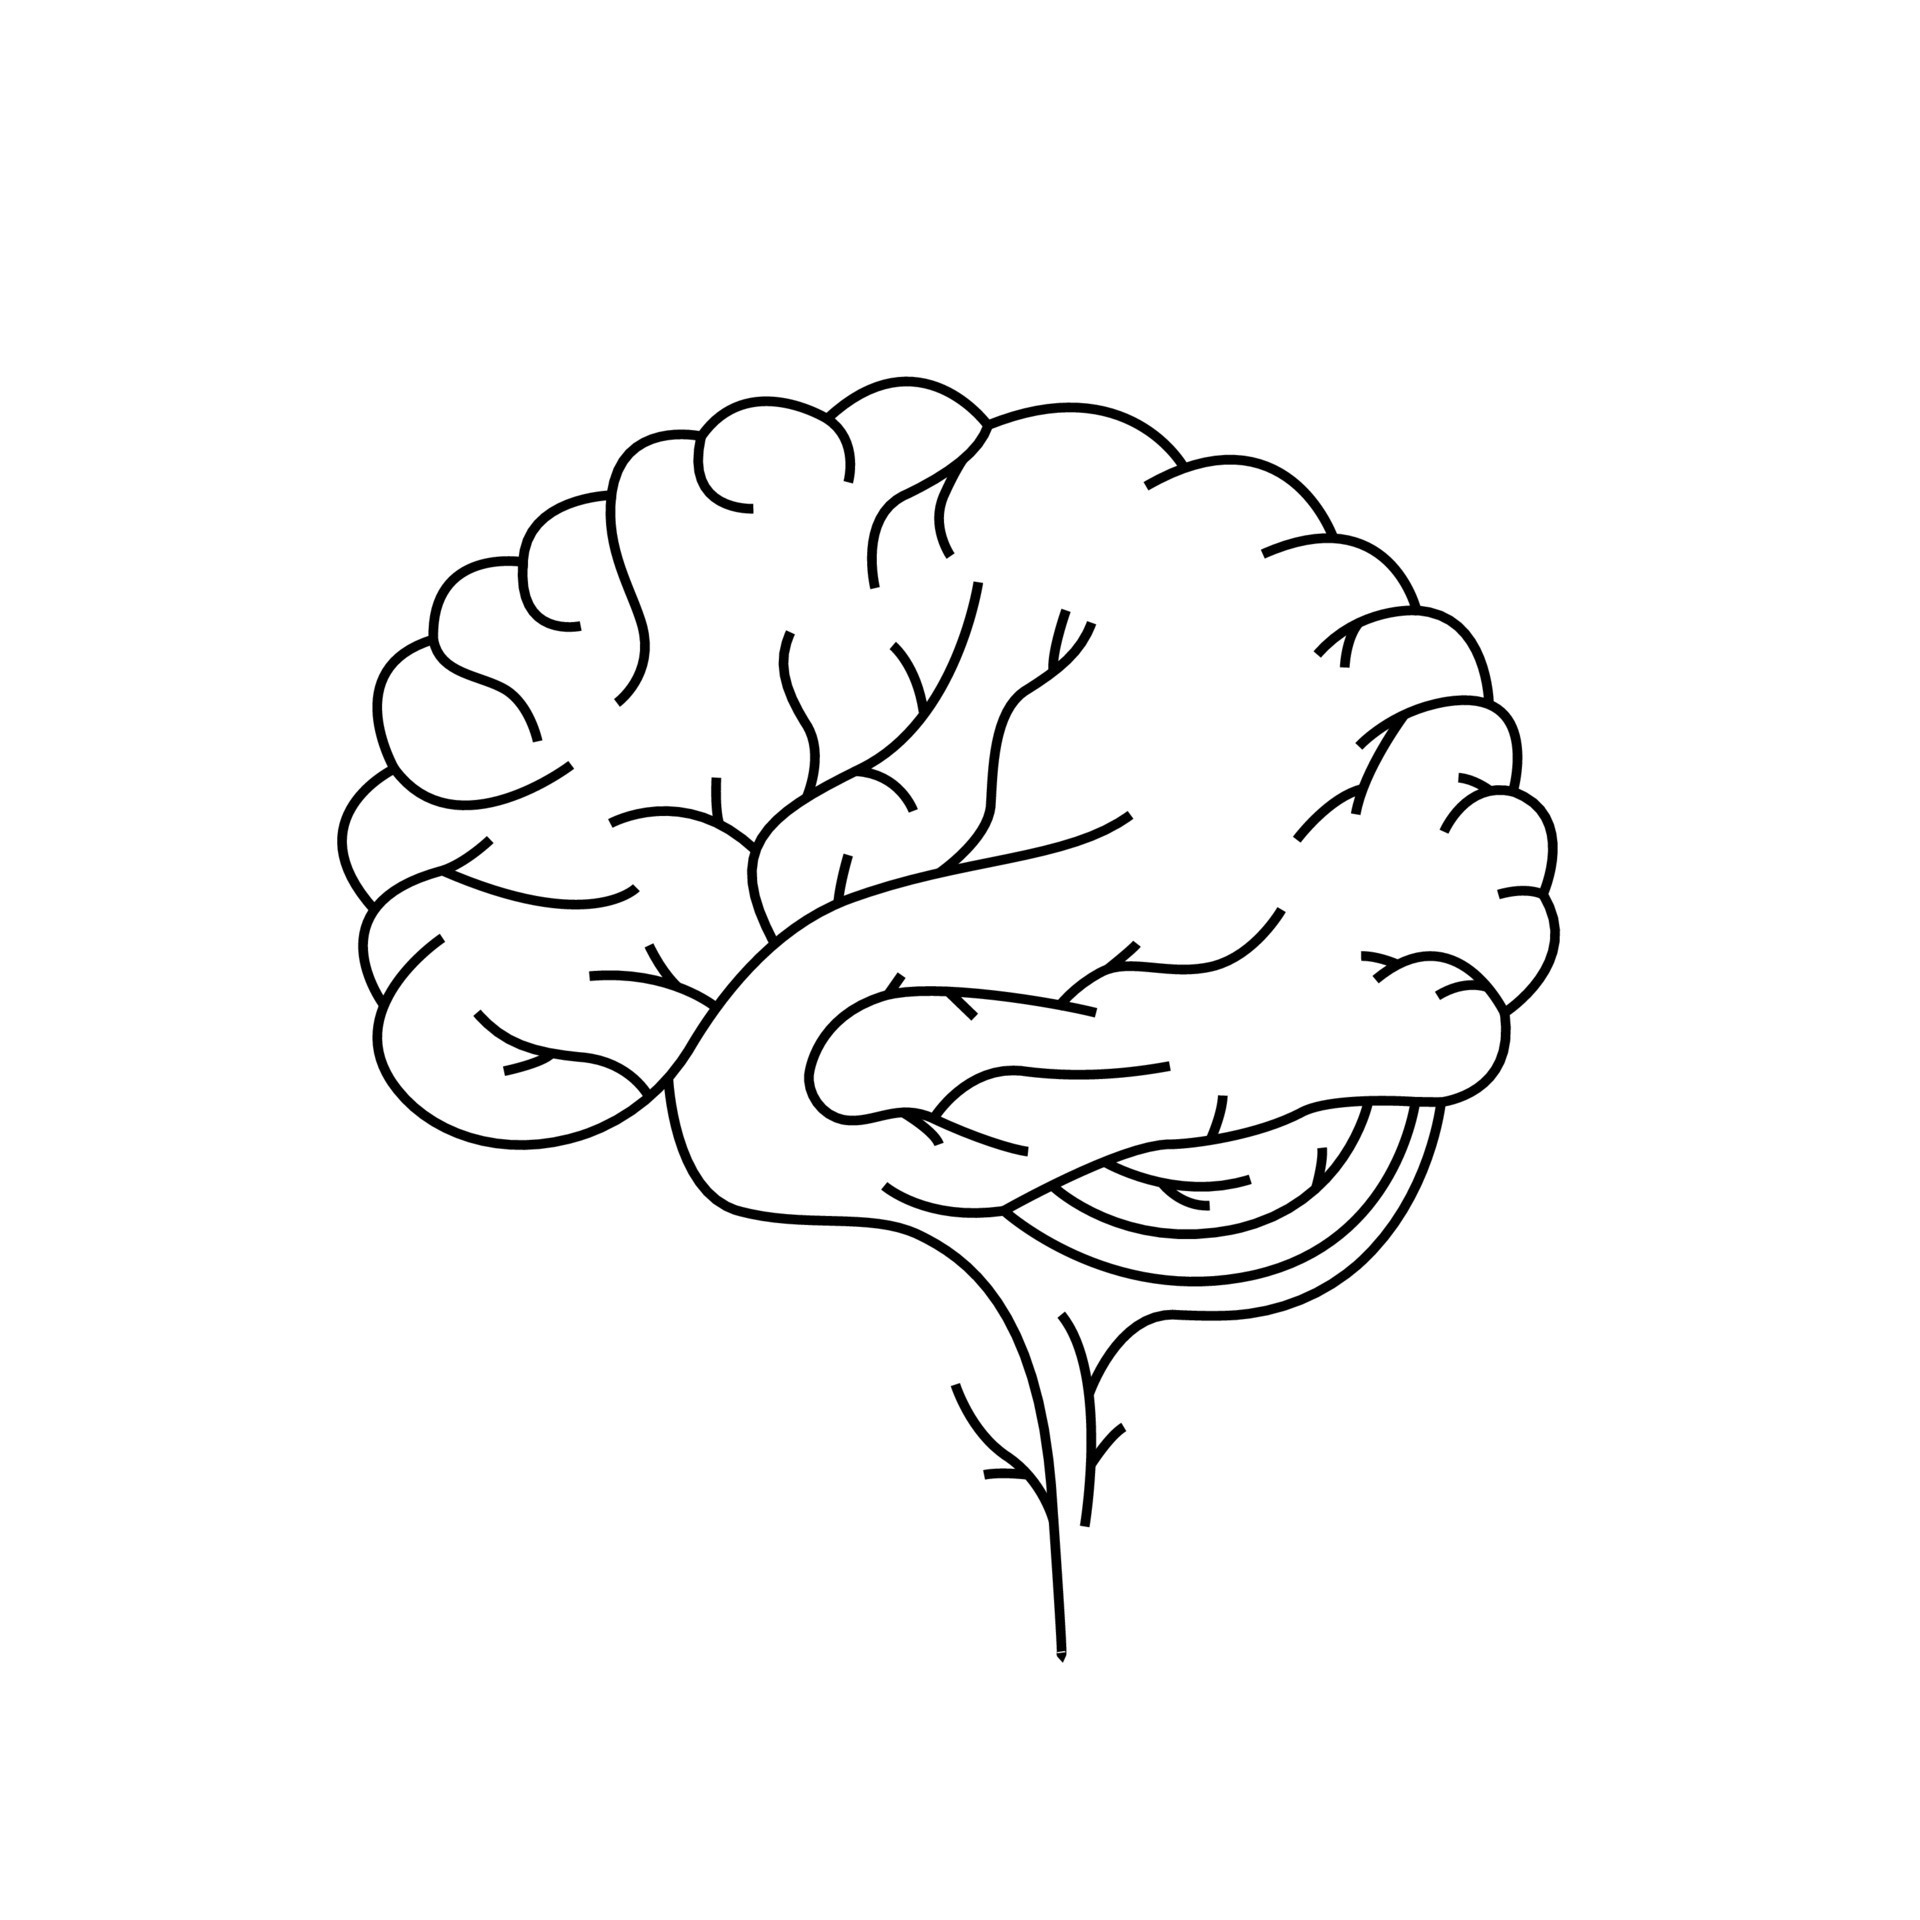 Share more than 73 brain sketching technique best - seven.edu.vn